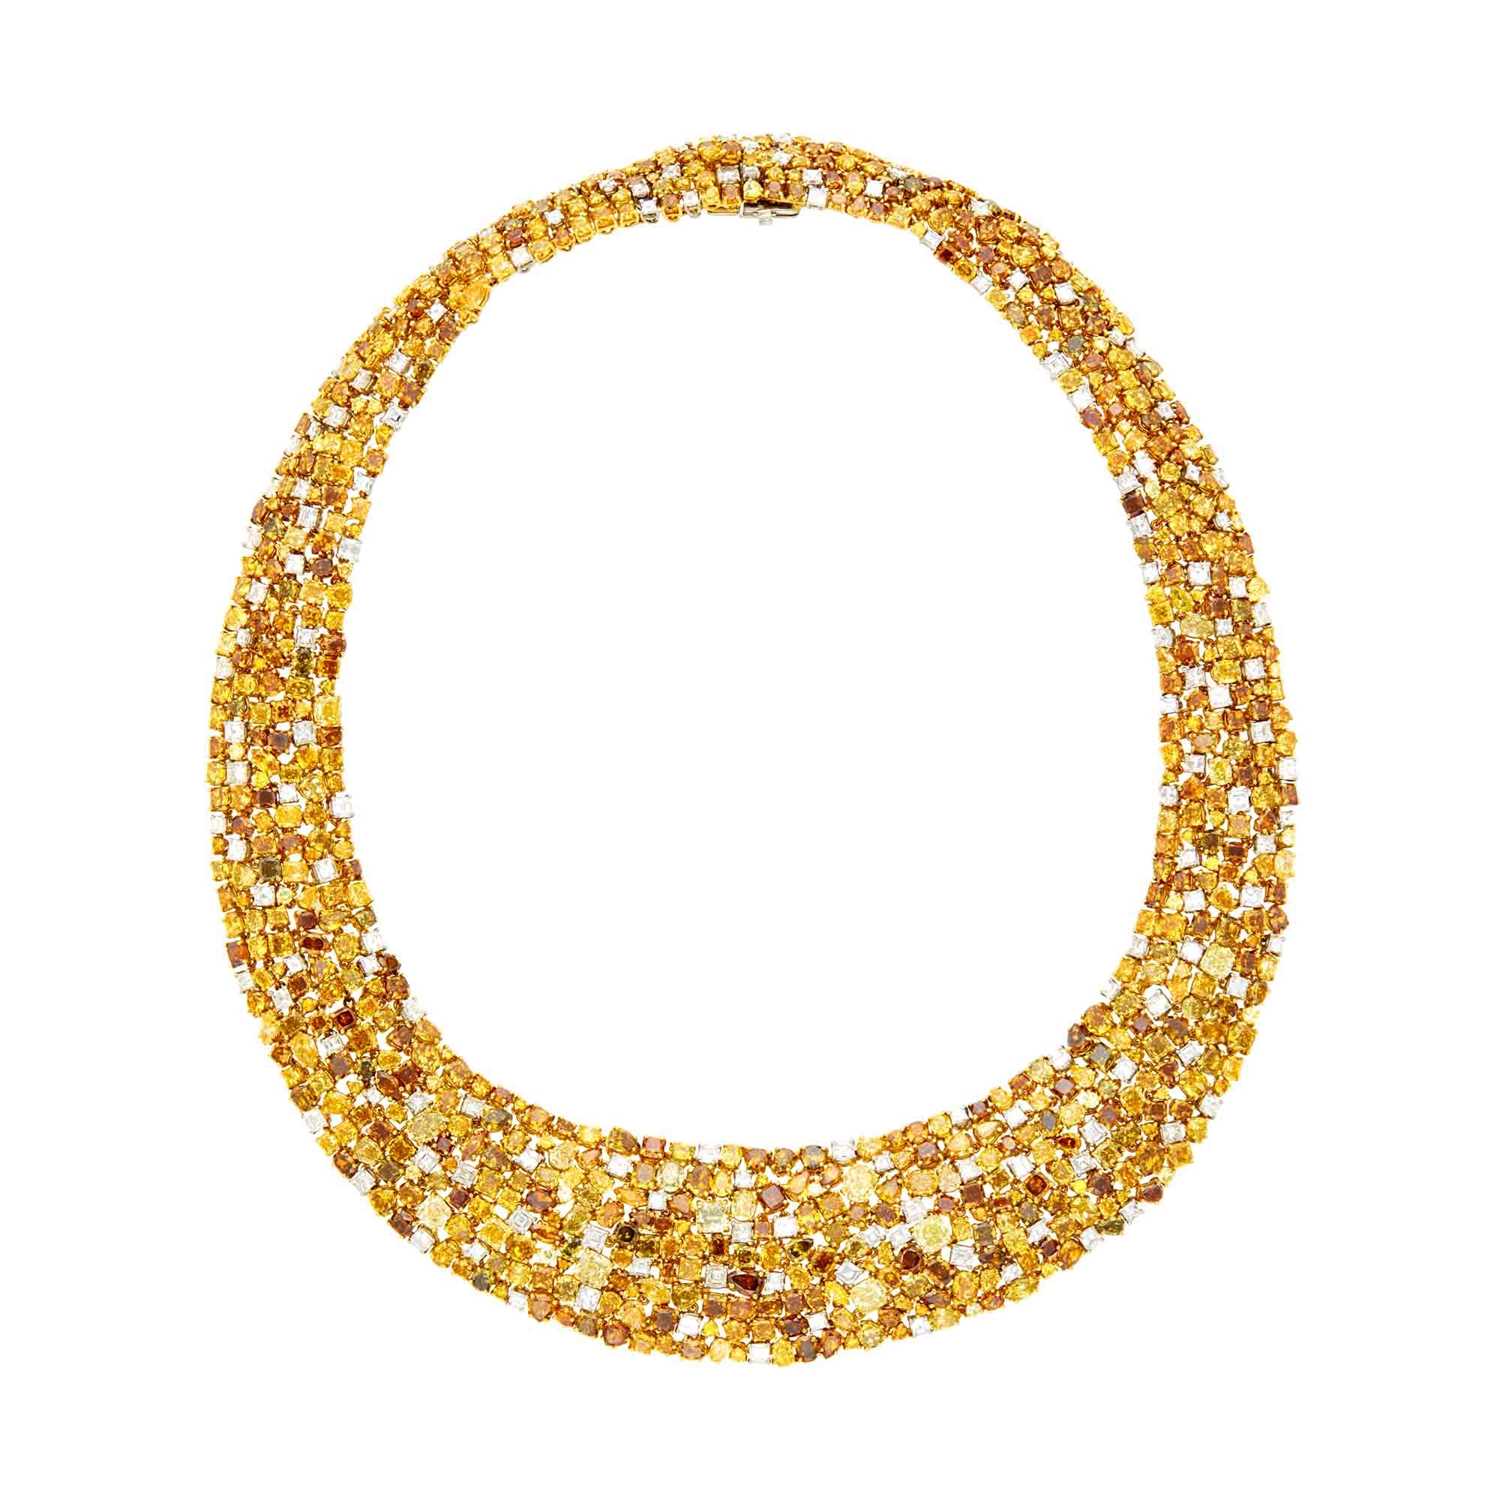 Lot 137 - Oscar Heyman Brothers Gold, Platinum Fancy Colored Diamond and Diamond Bib Necklace